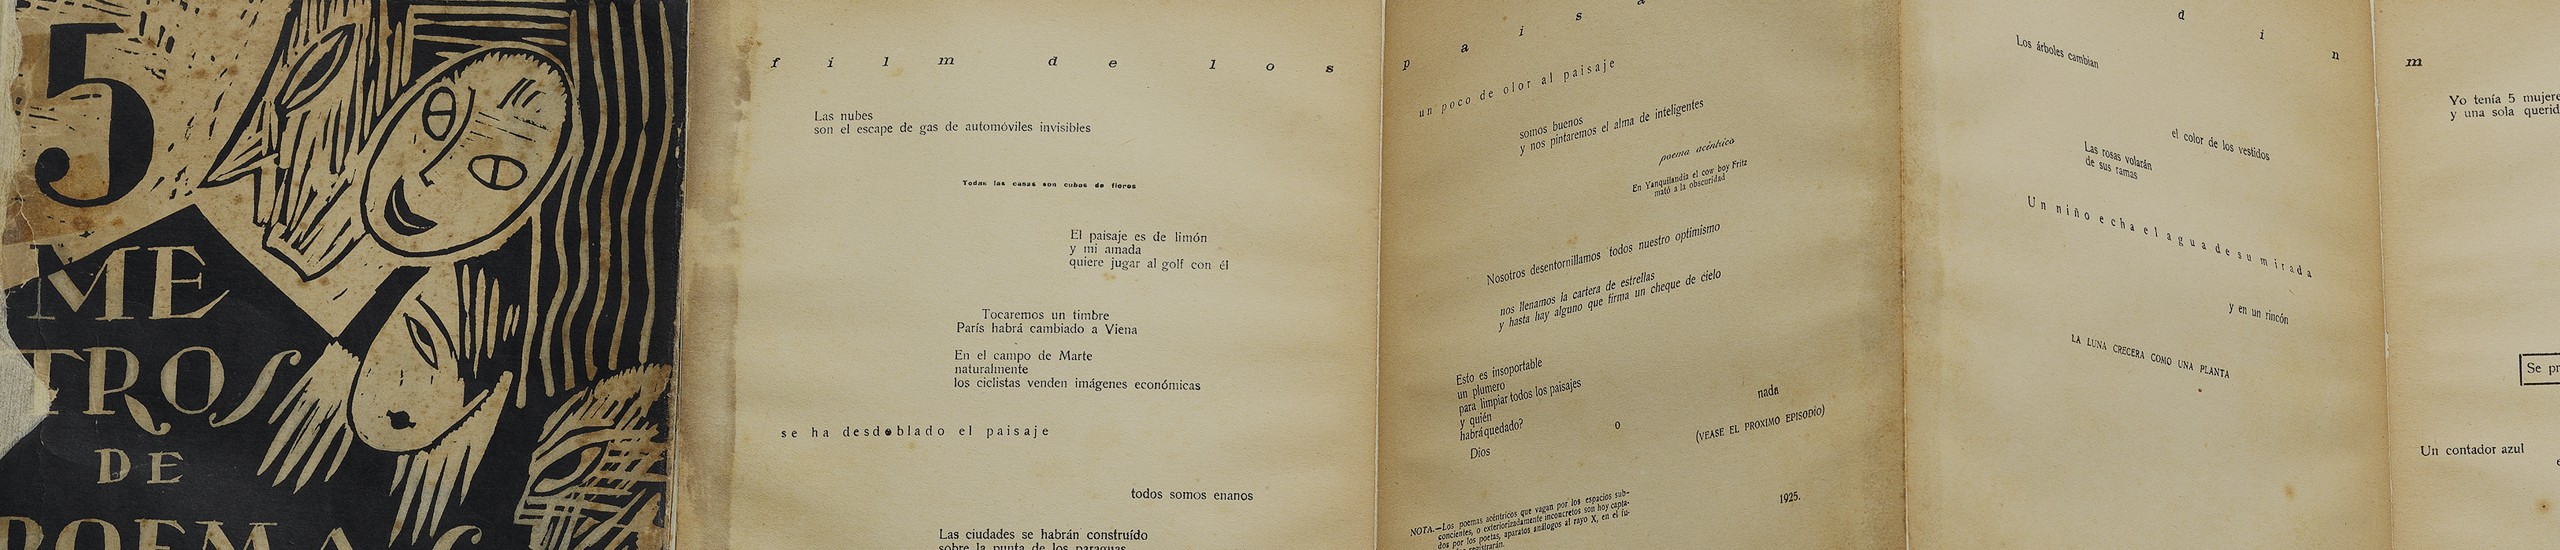 Carlos Oquendo de Amat: <i>5 metros de poemas</i>, 1927